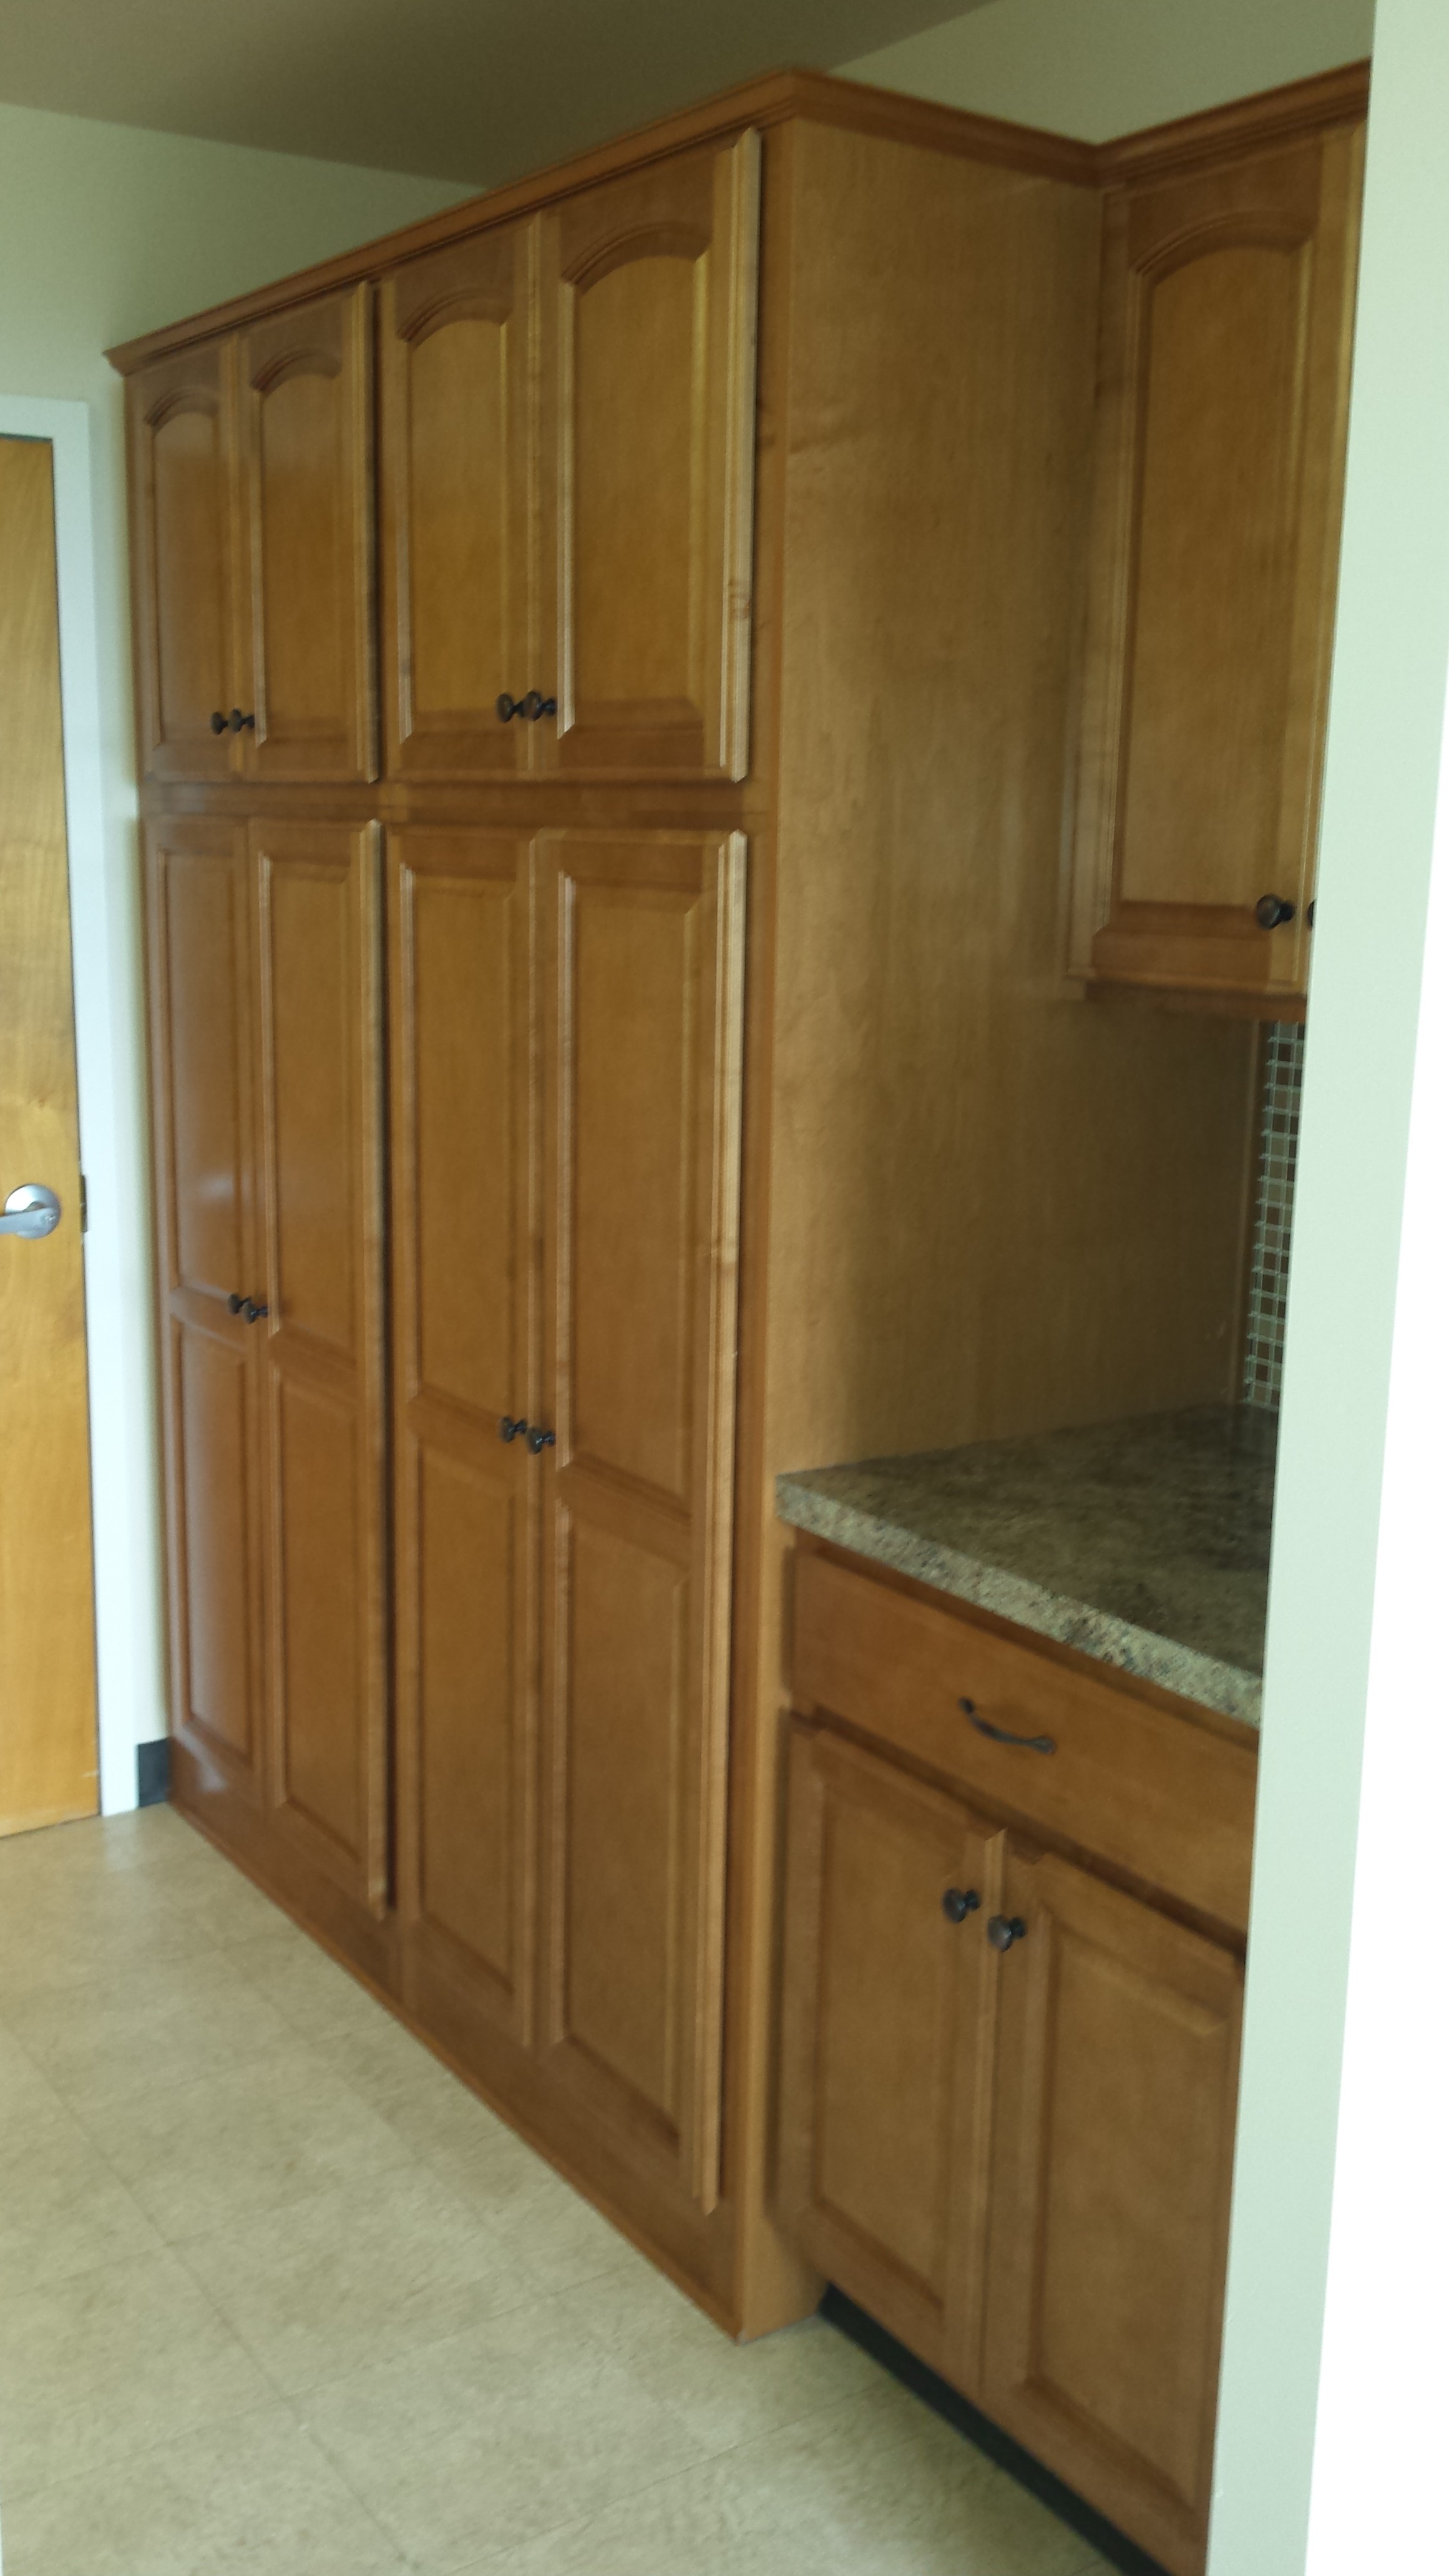 Senior One Bedroom Apartment Kitchen Cabinet